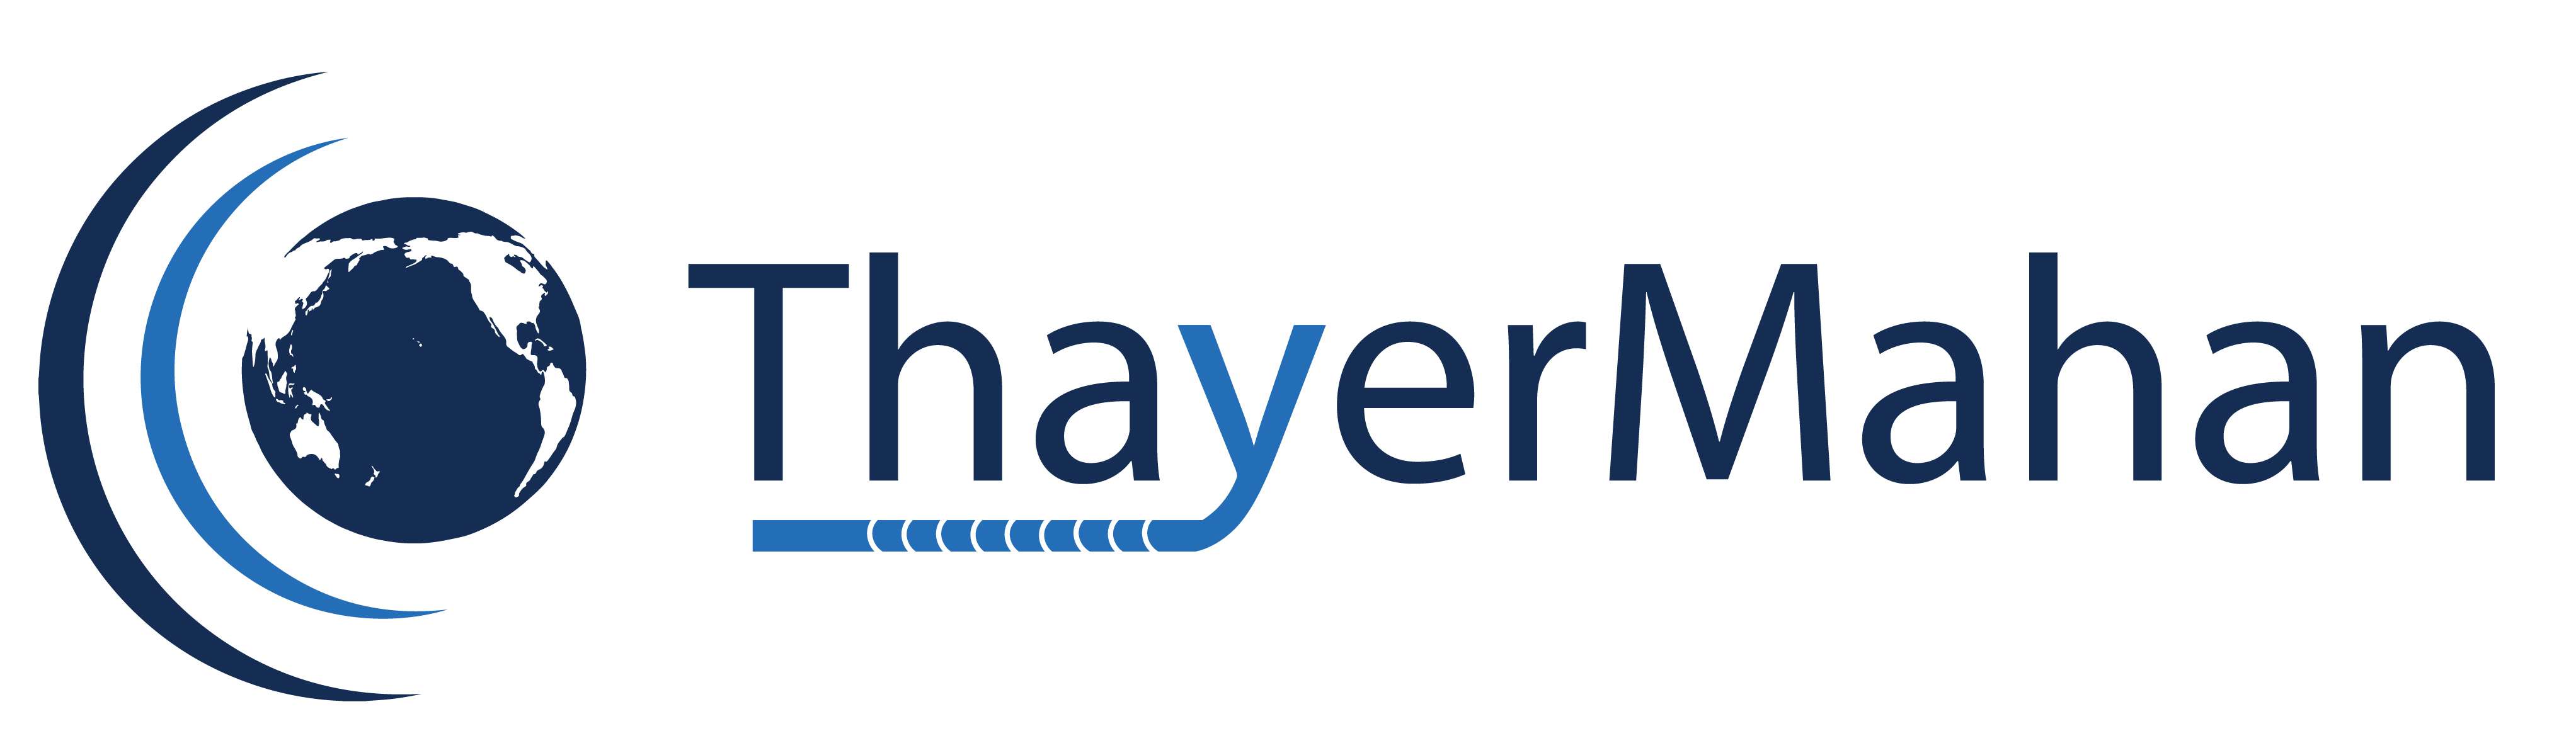 Thayermahan, Inc.